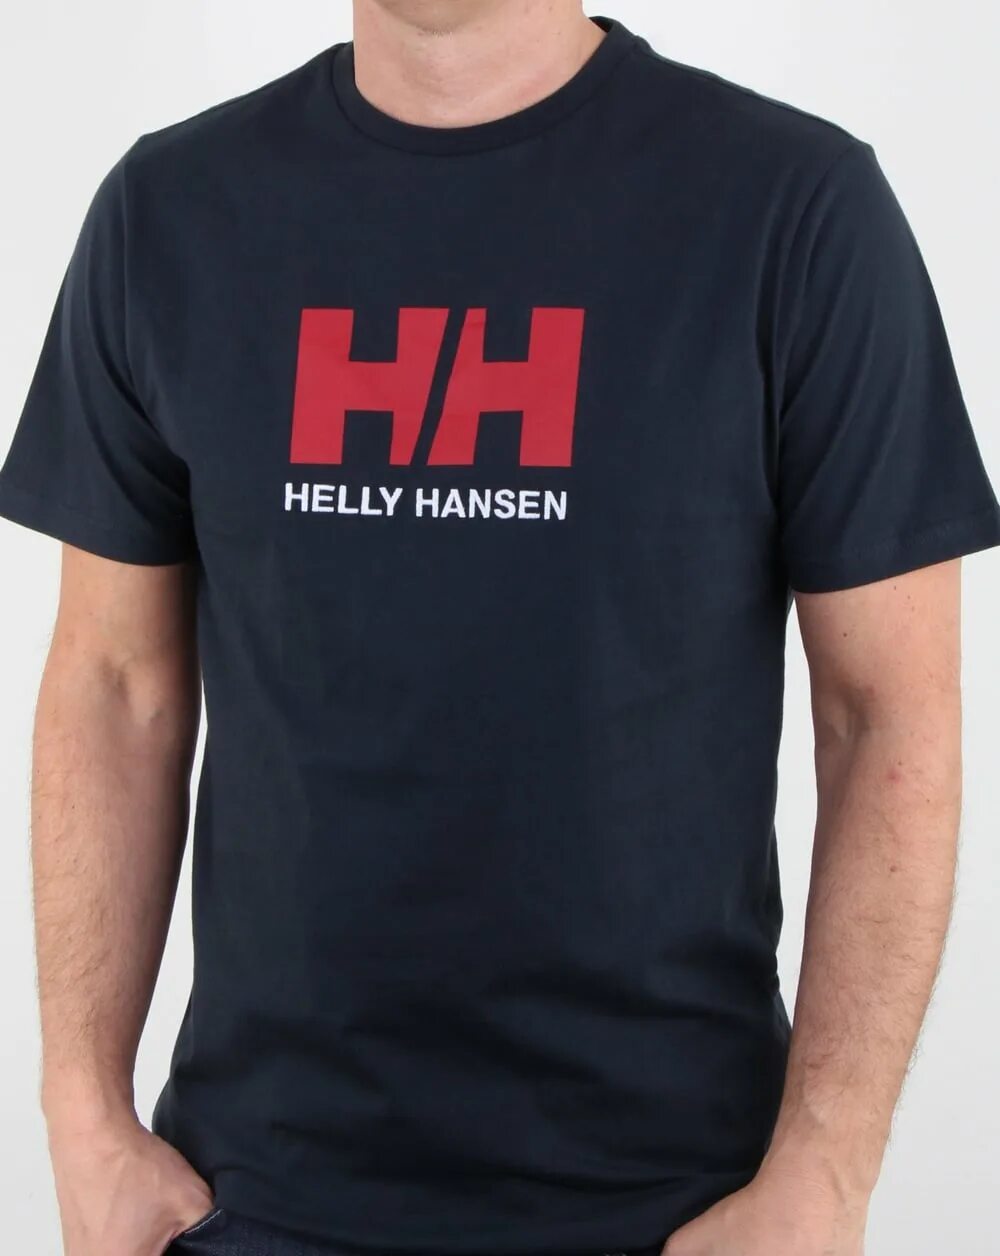 Helly Hansen t Shirt. HH Helly Hansen лого. Helly Hansen big logo. Футболка HH logo. Фирма майк